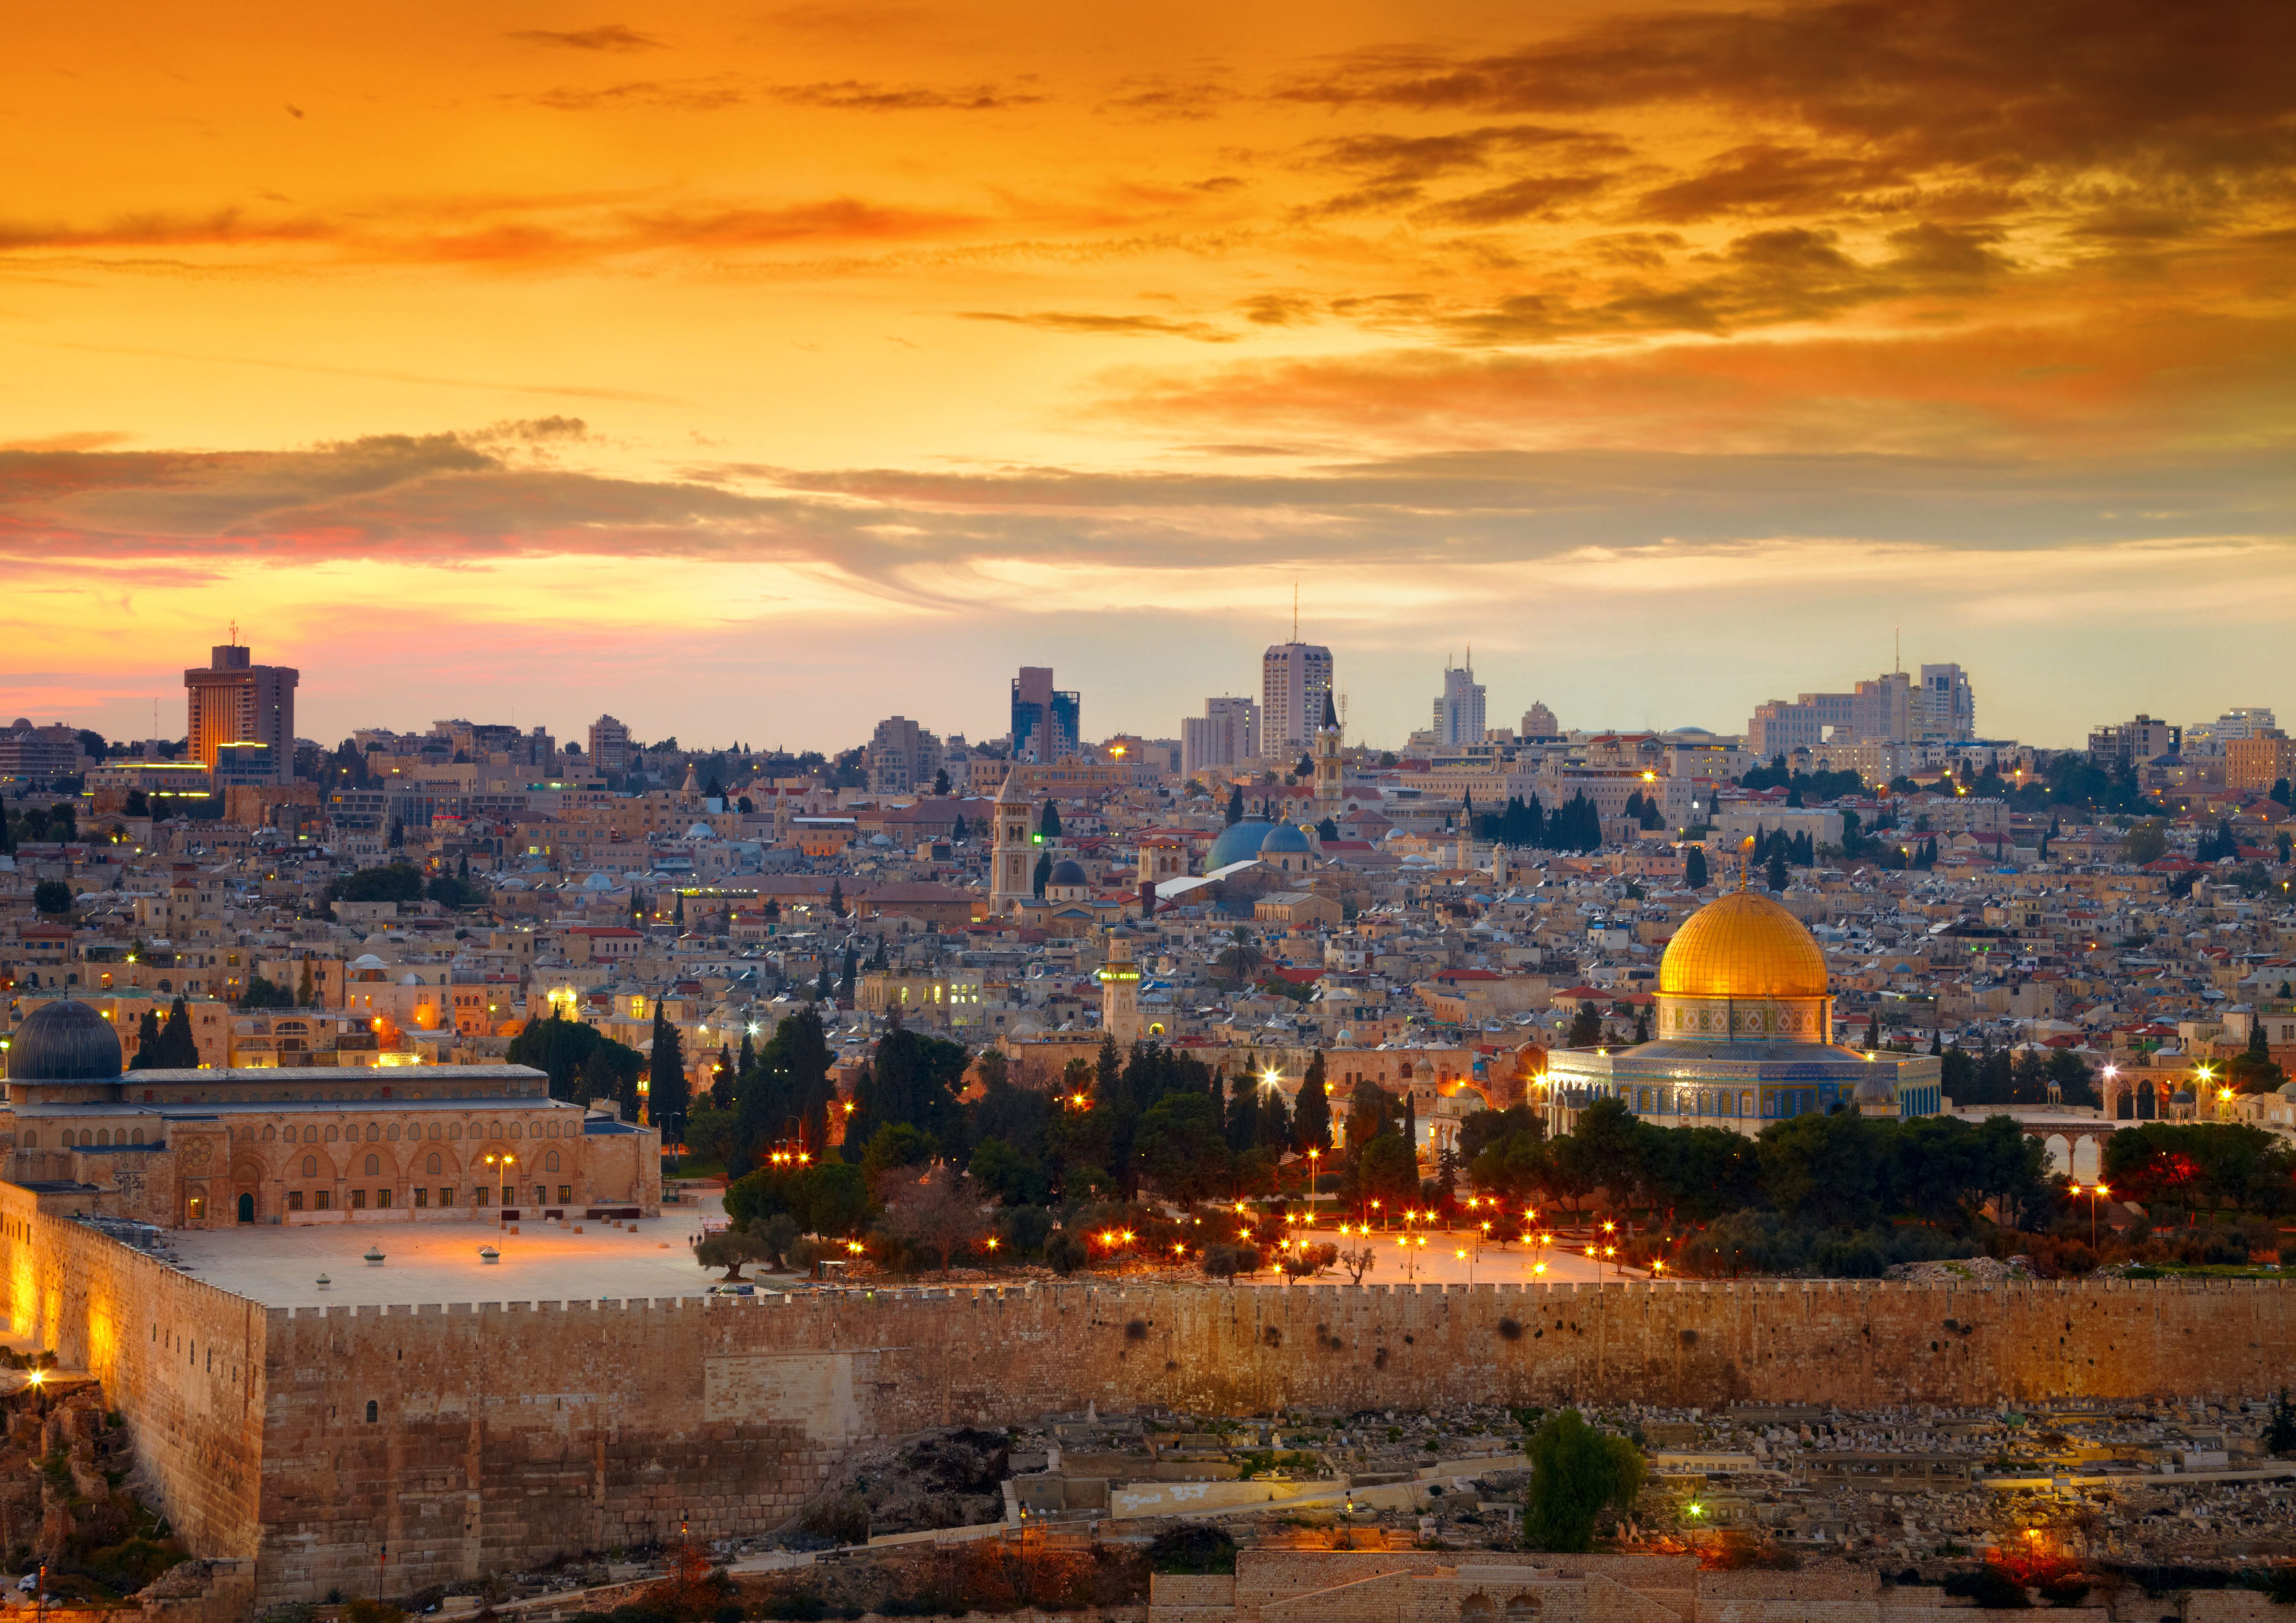 Jerusalemin vanha kaupunki auringonlaskun valossa.